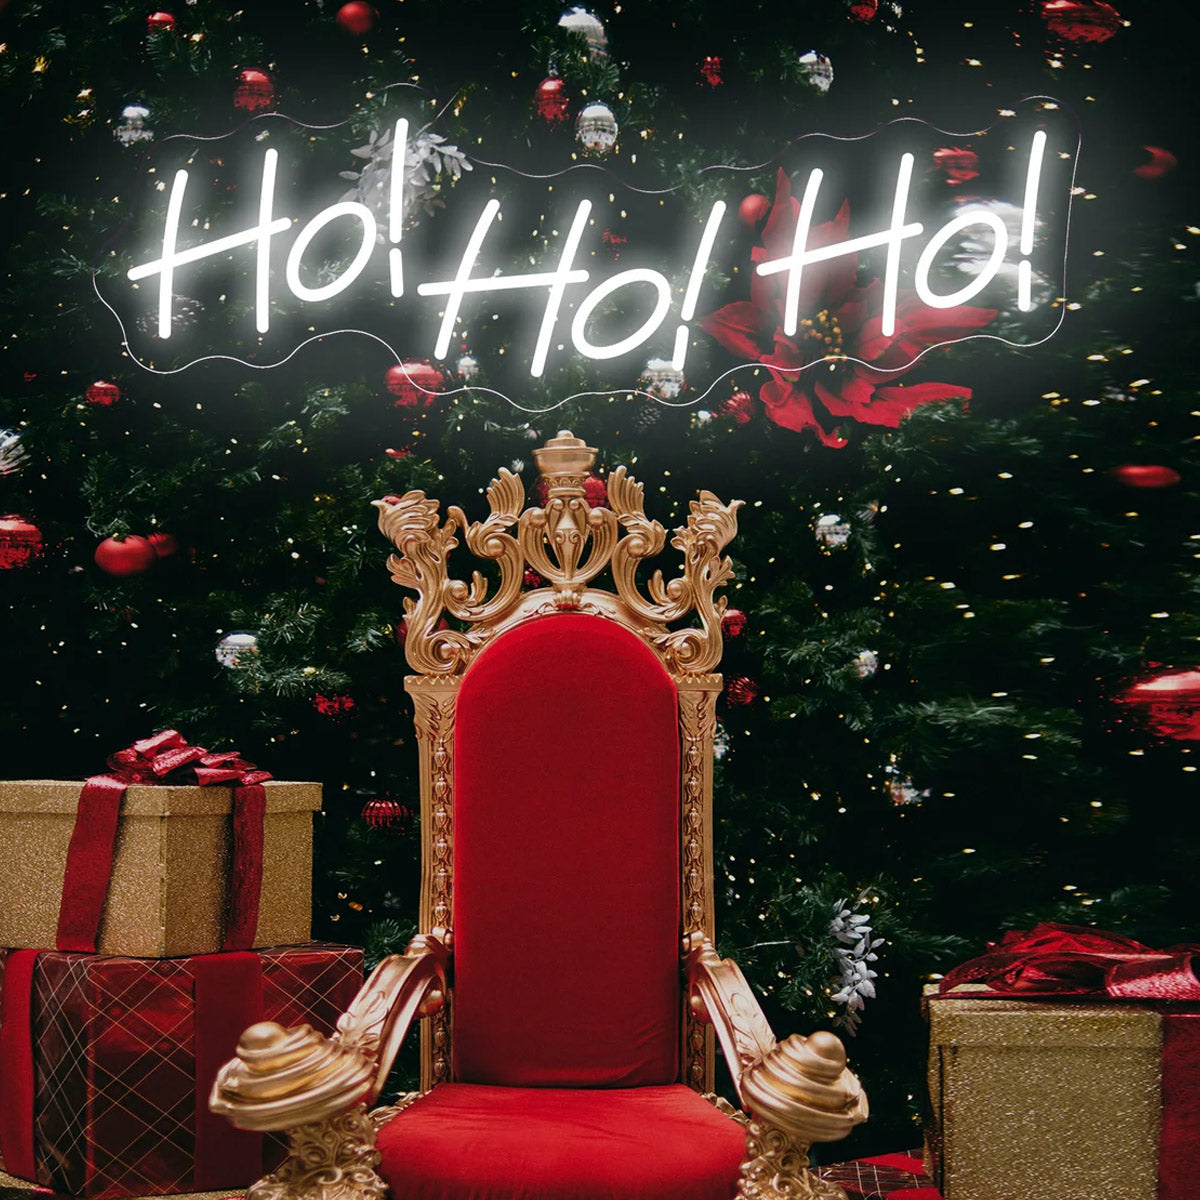 NEONIP-100% Handmade Merry Christmas Ho!Ho!Ho! Neon Sign Led Sign for Christmas Eve